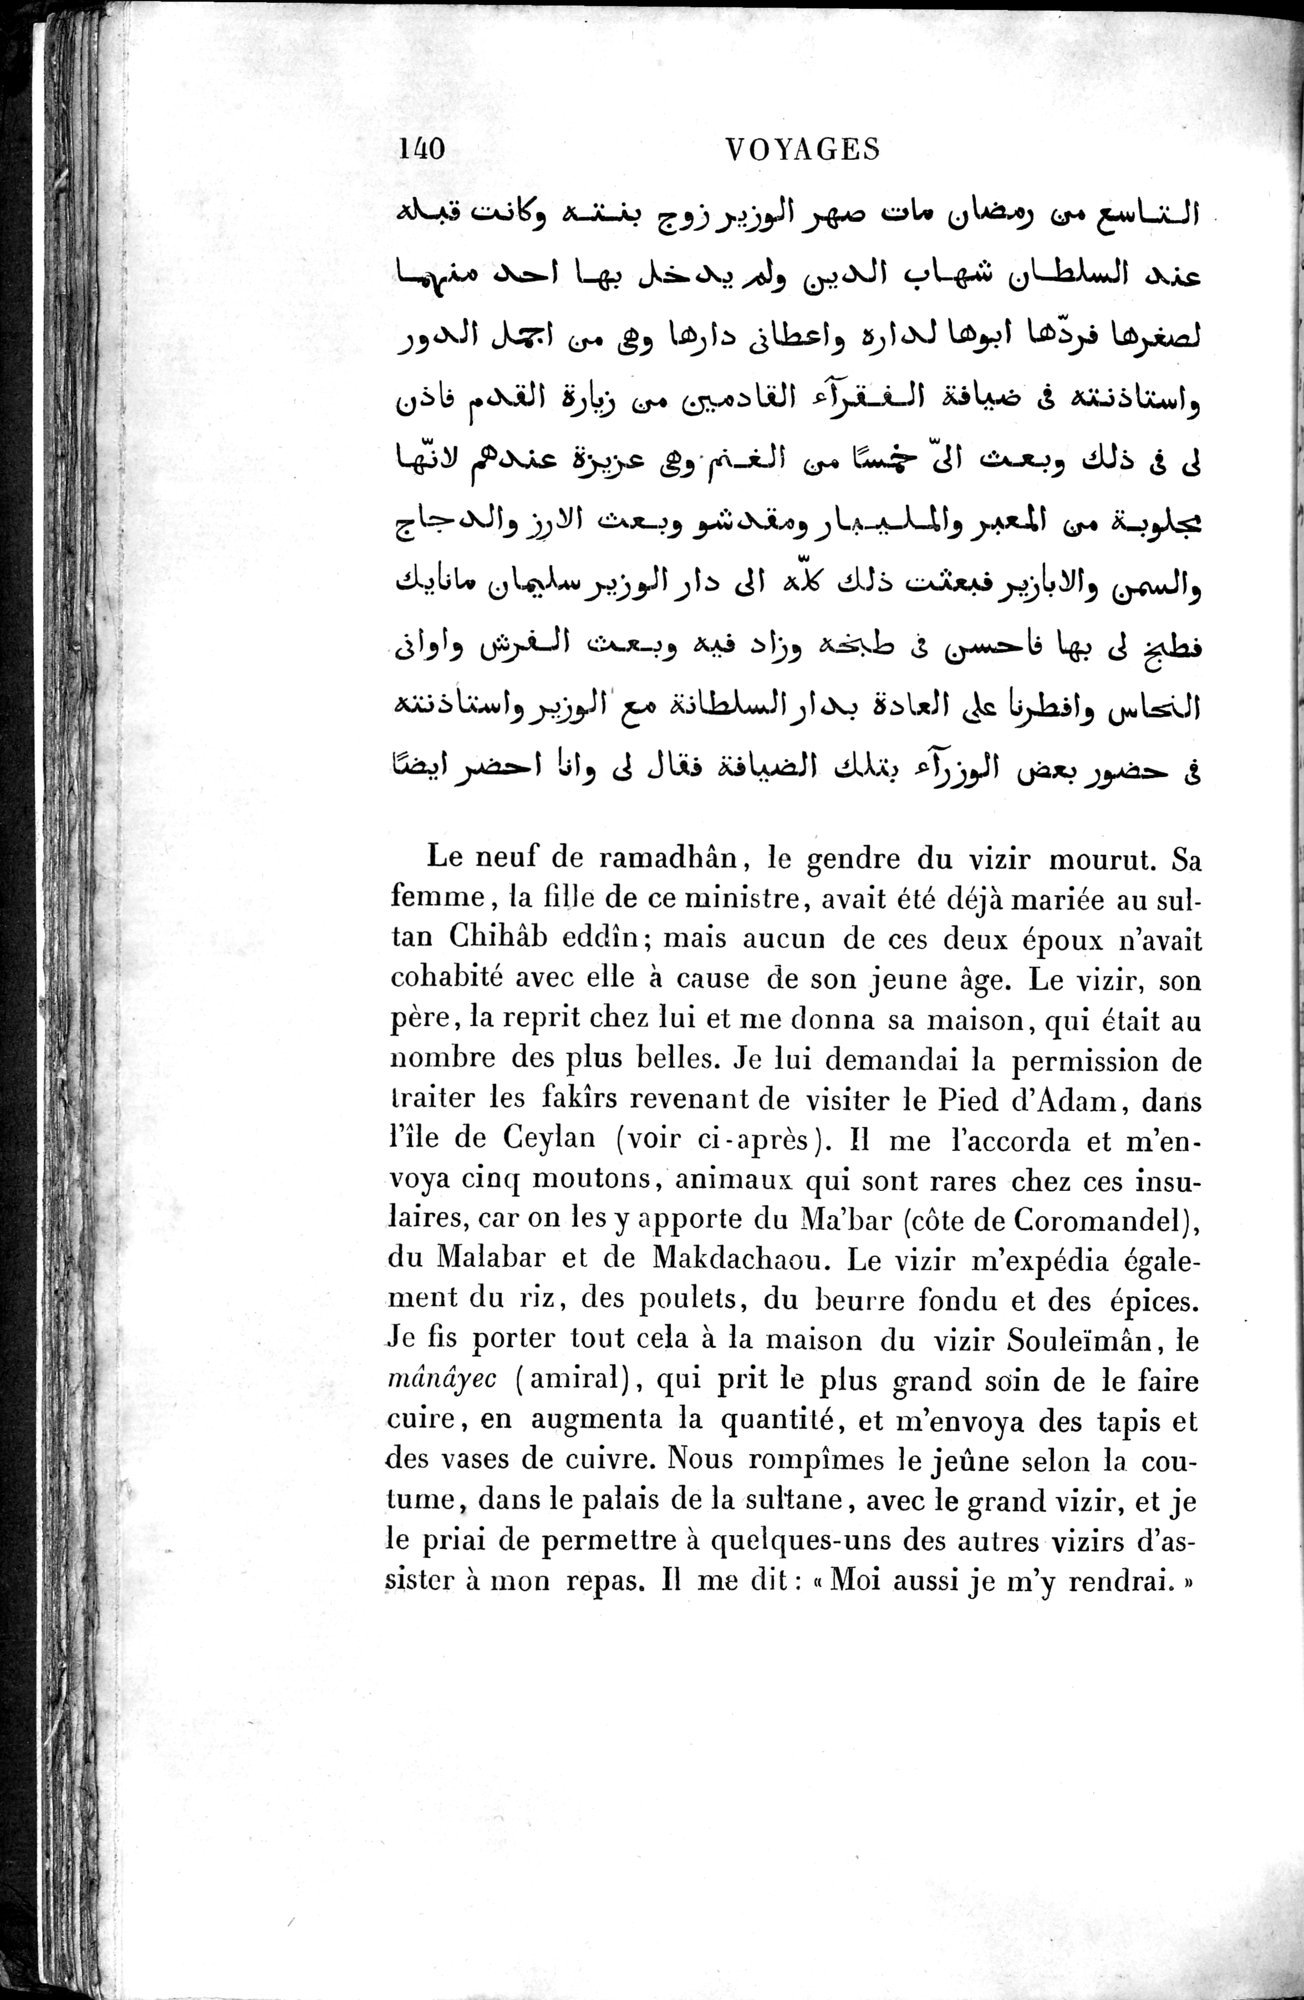 Voyages d'Ibn Batoutah : vol.4 / 152 ページ（白黒高解像度画像）